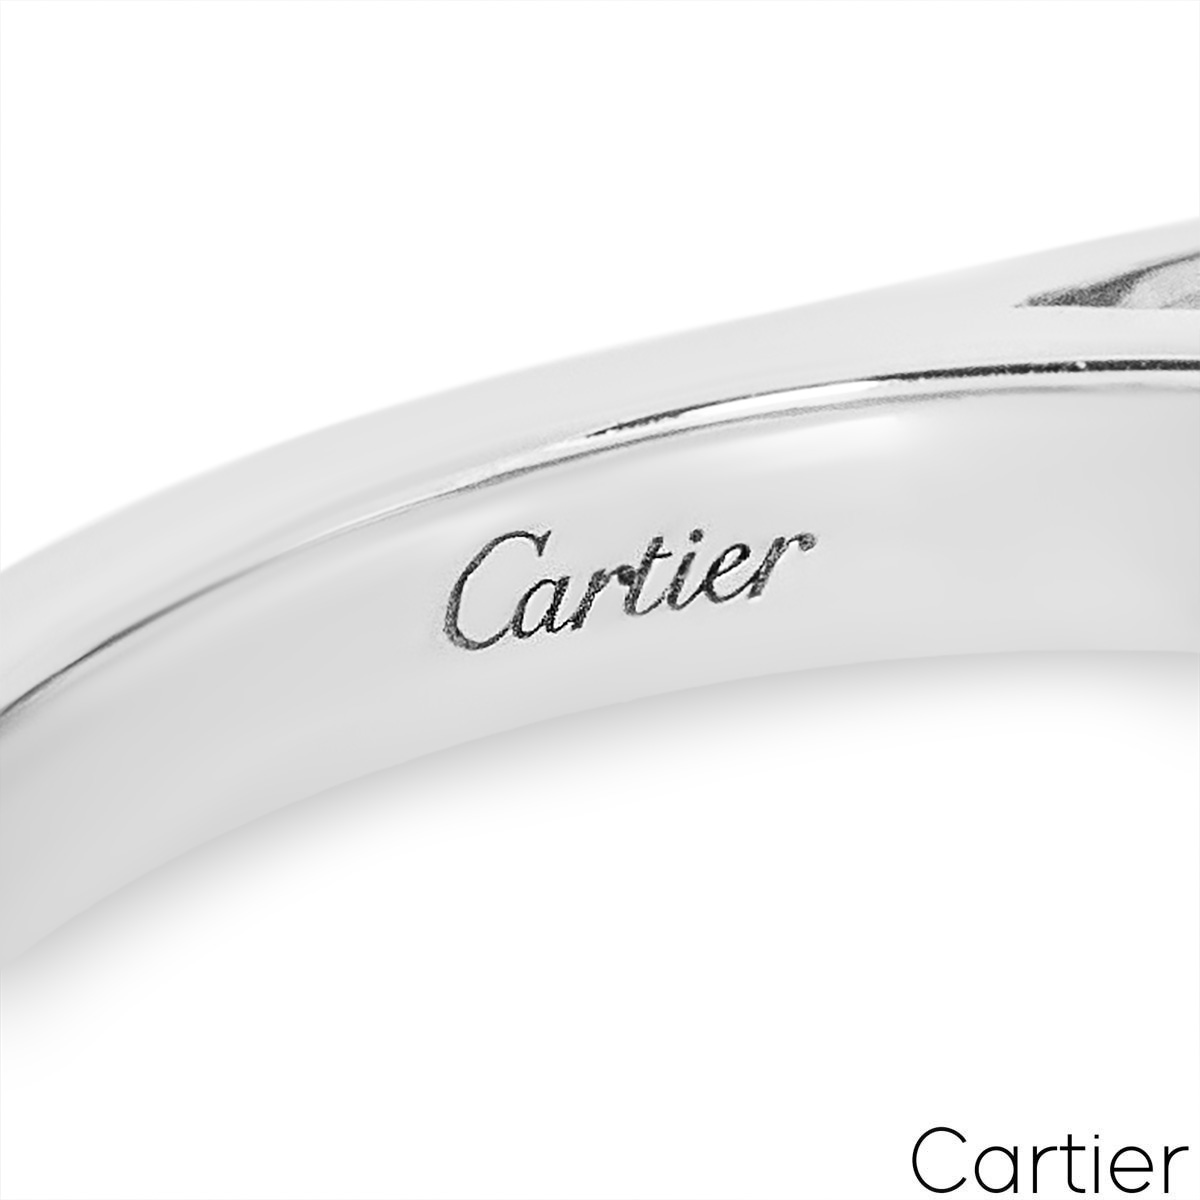 Cartier Platinum Diamond 1895 Solitaire Ring 1.54ct G/VS2